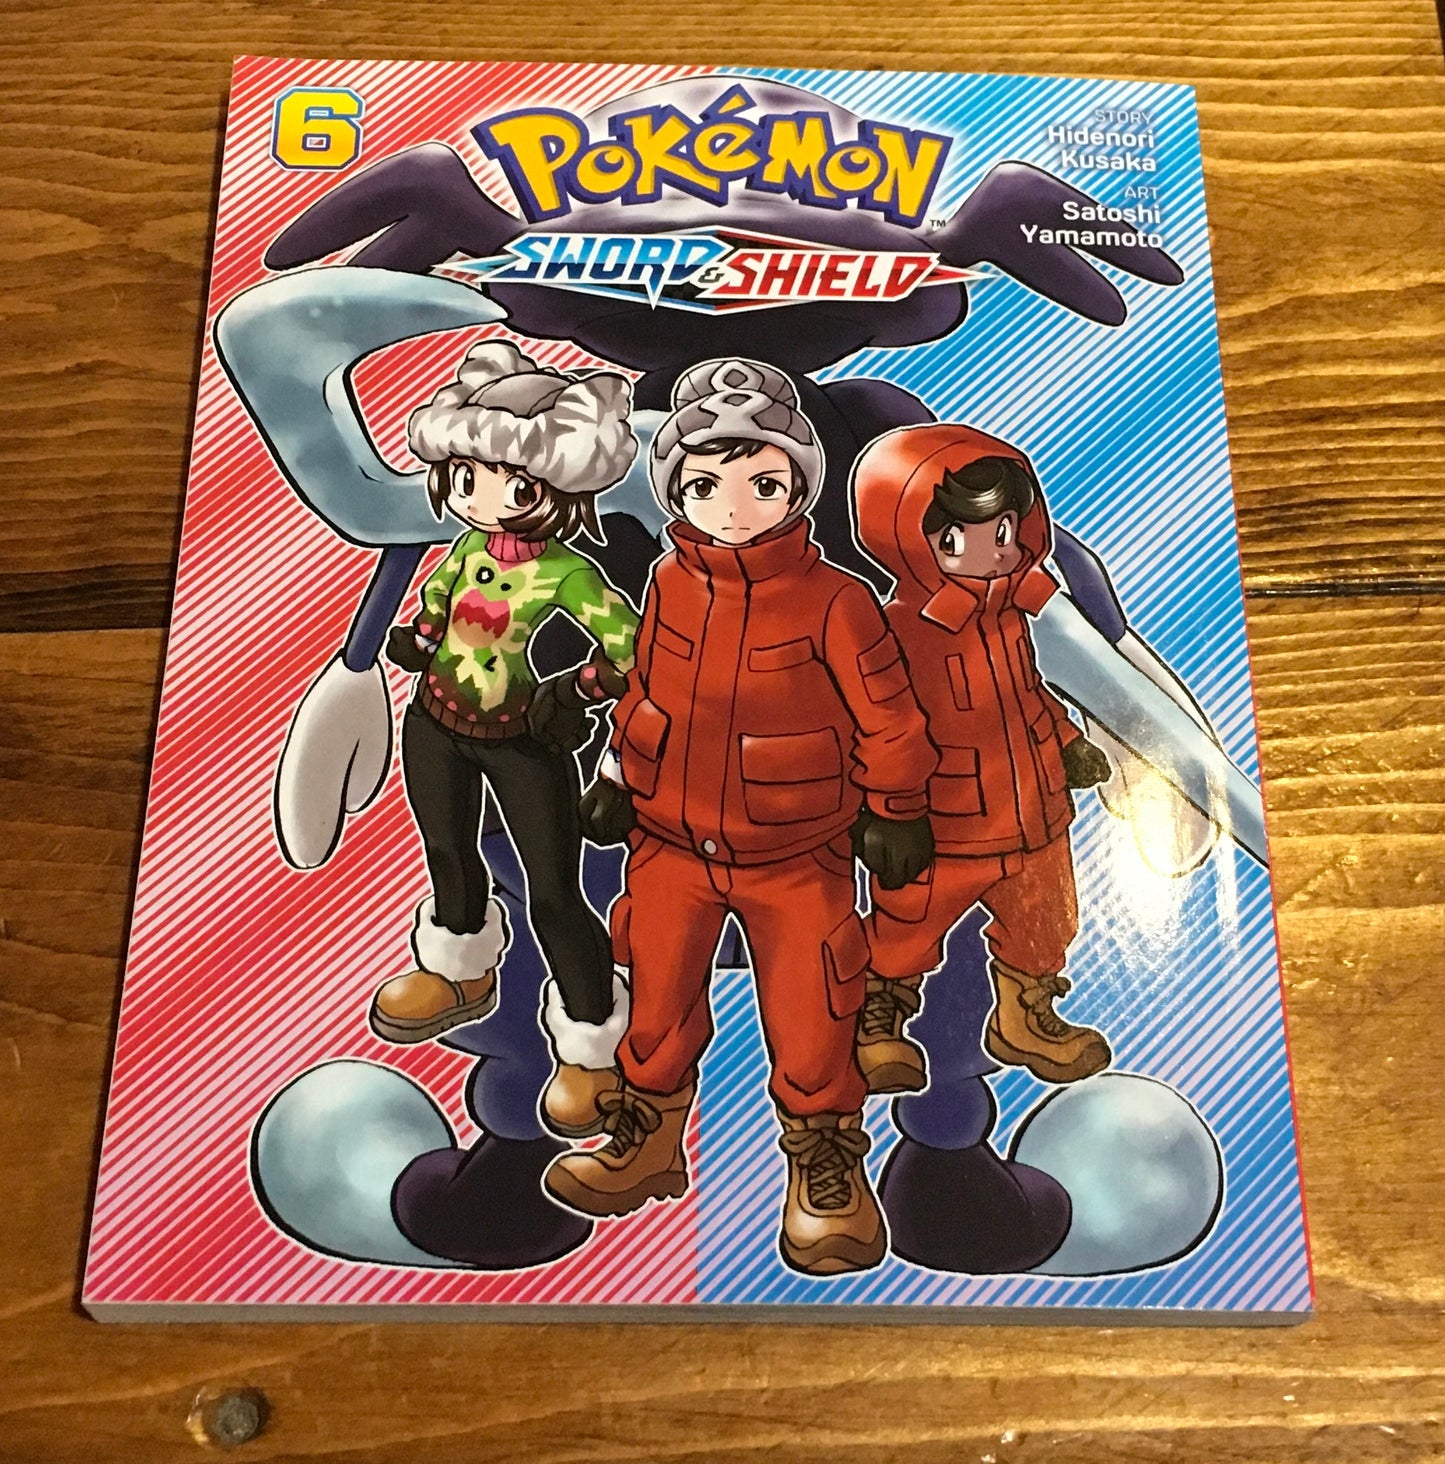 Pokémon adventures Sword and Shield manga/graphic novel vol. 6